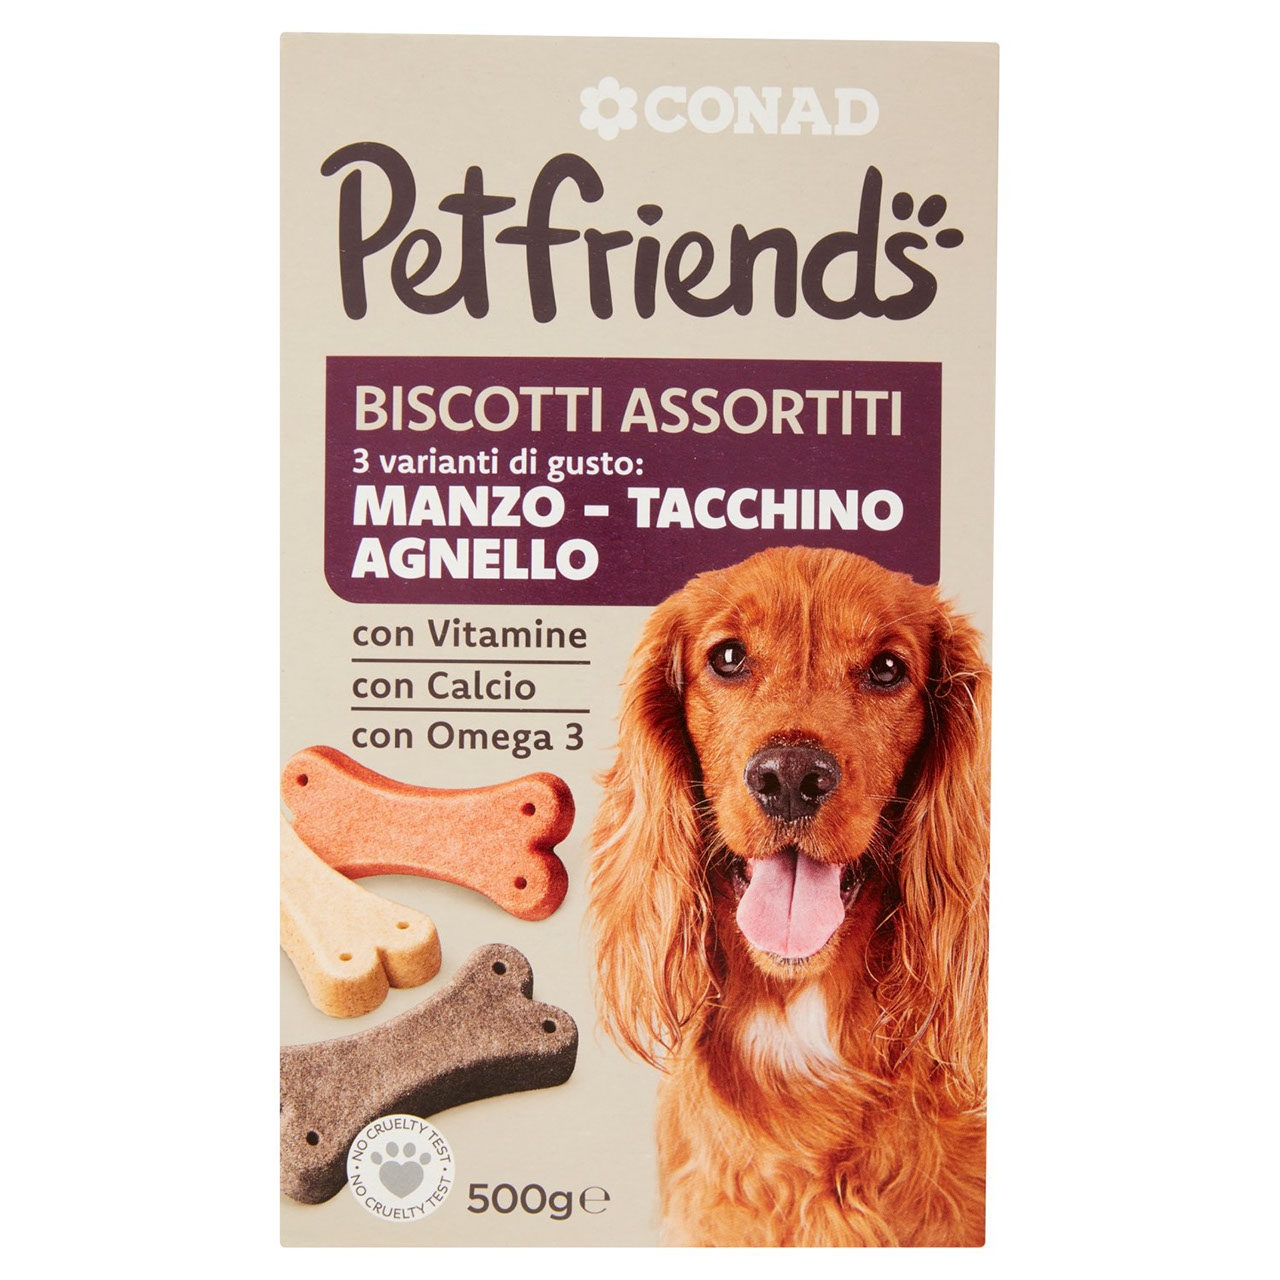 Biscotti per Cani 3 Gusti Petfriends Conad